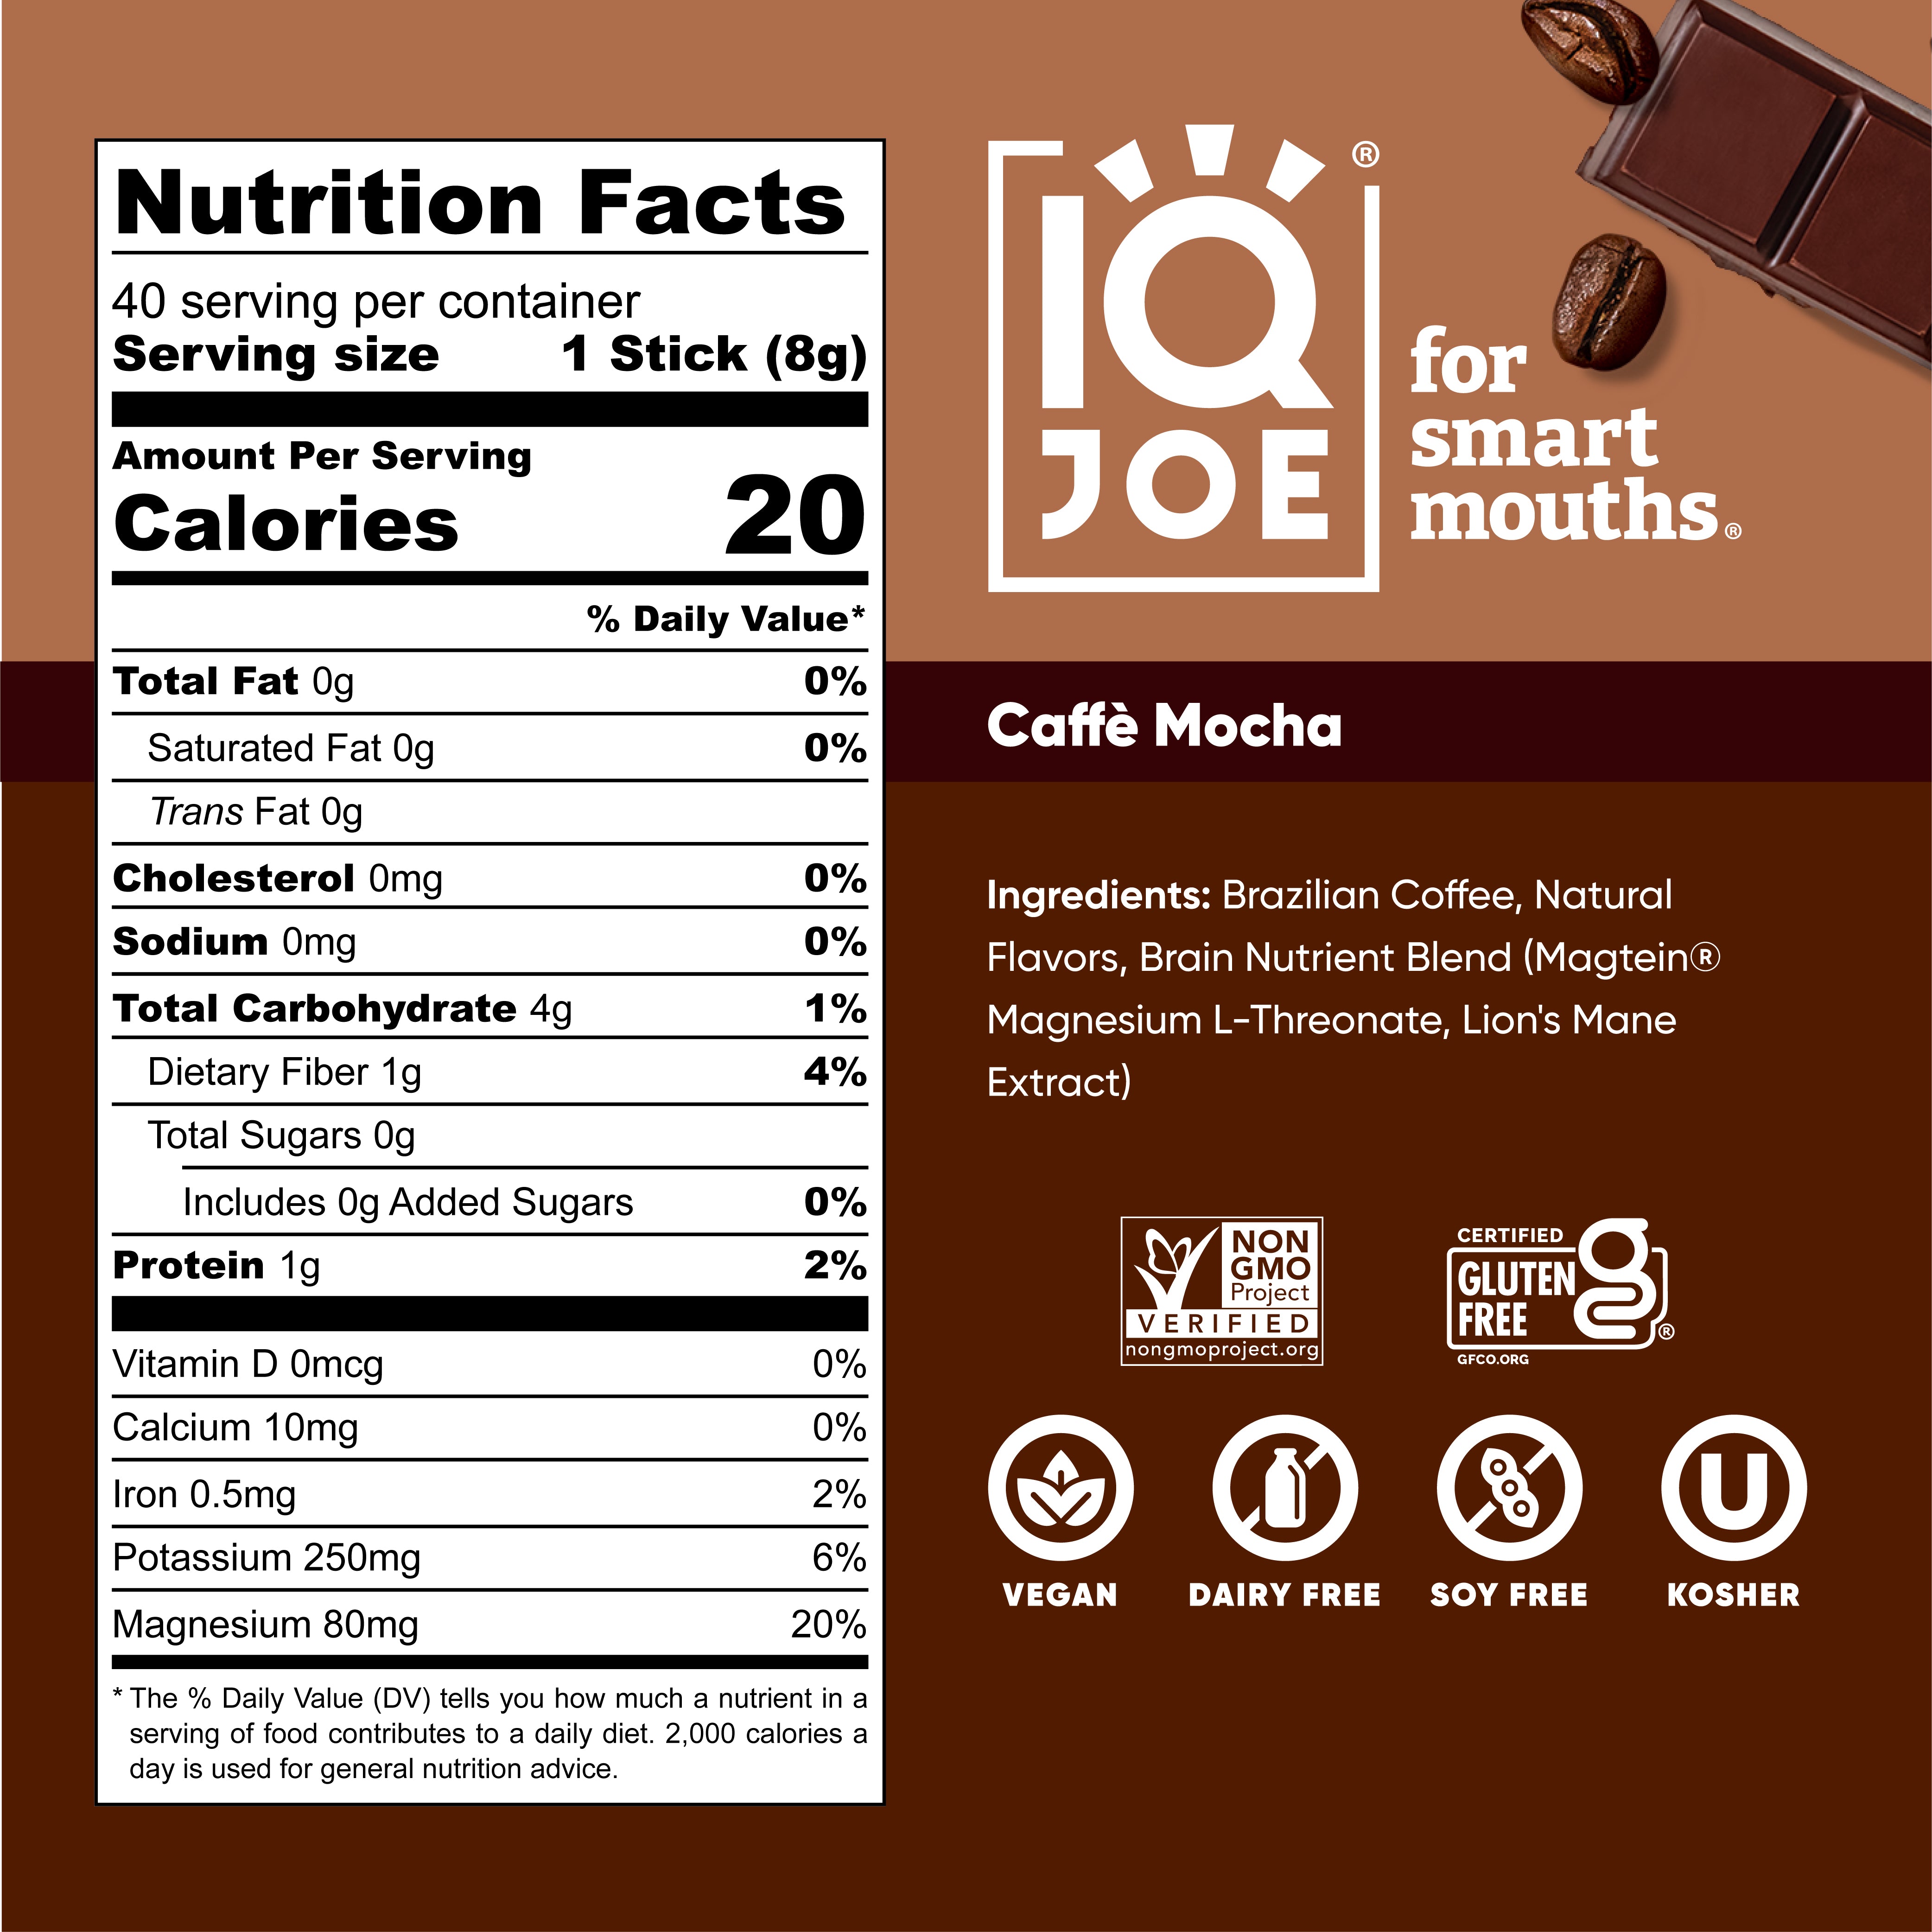 IQJOE Caffe Mocha Nutrition Facts, Non-GMO Verified, Certified Gluten-Free, Vegan, Dairy-Free, Soy-Free, Kosher, 0g Sugar.